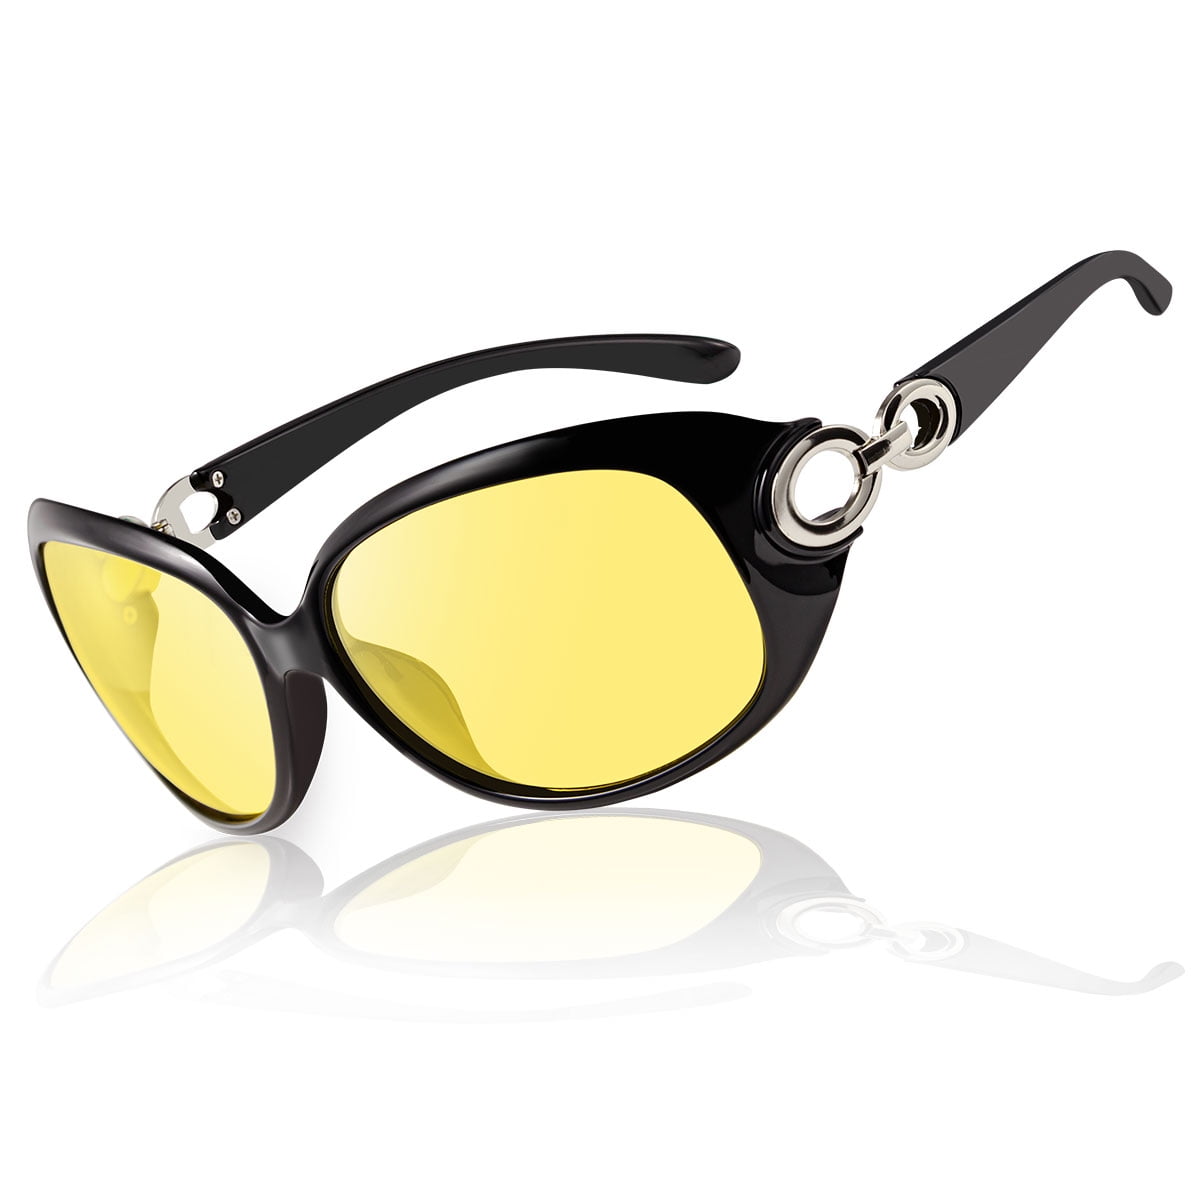 Bloomoak Night Driving Glasses for Women, Oversized Polarized Fashion ...